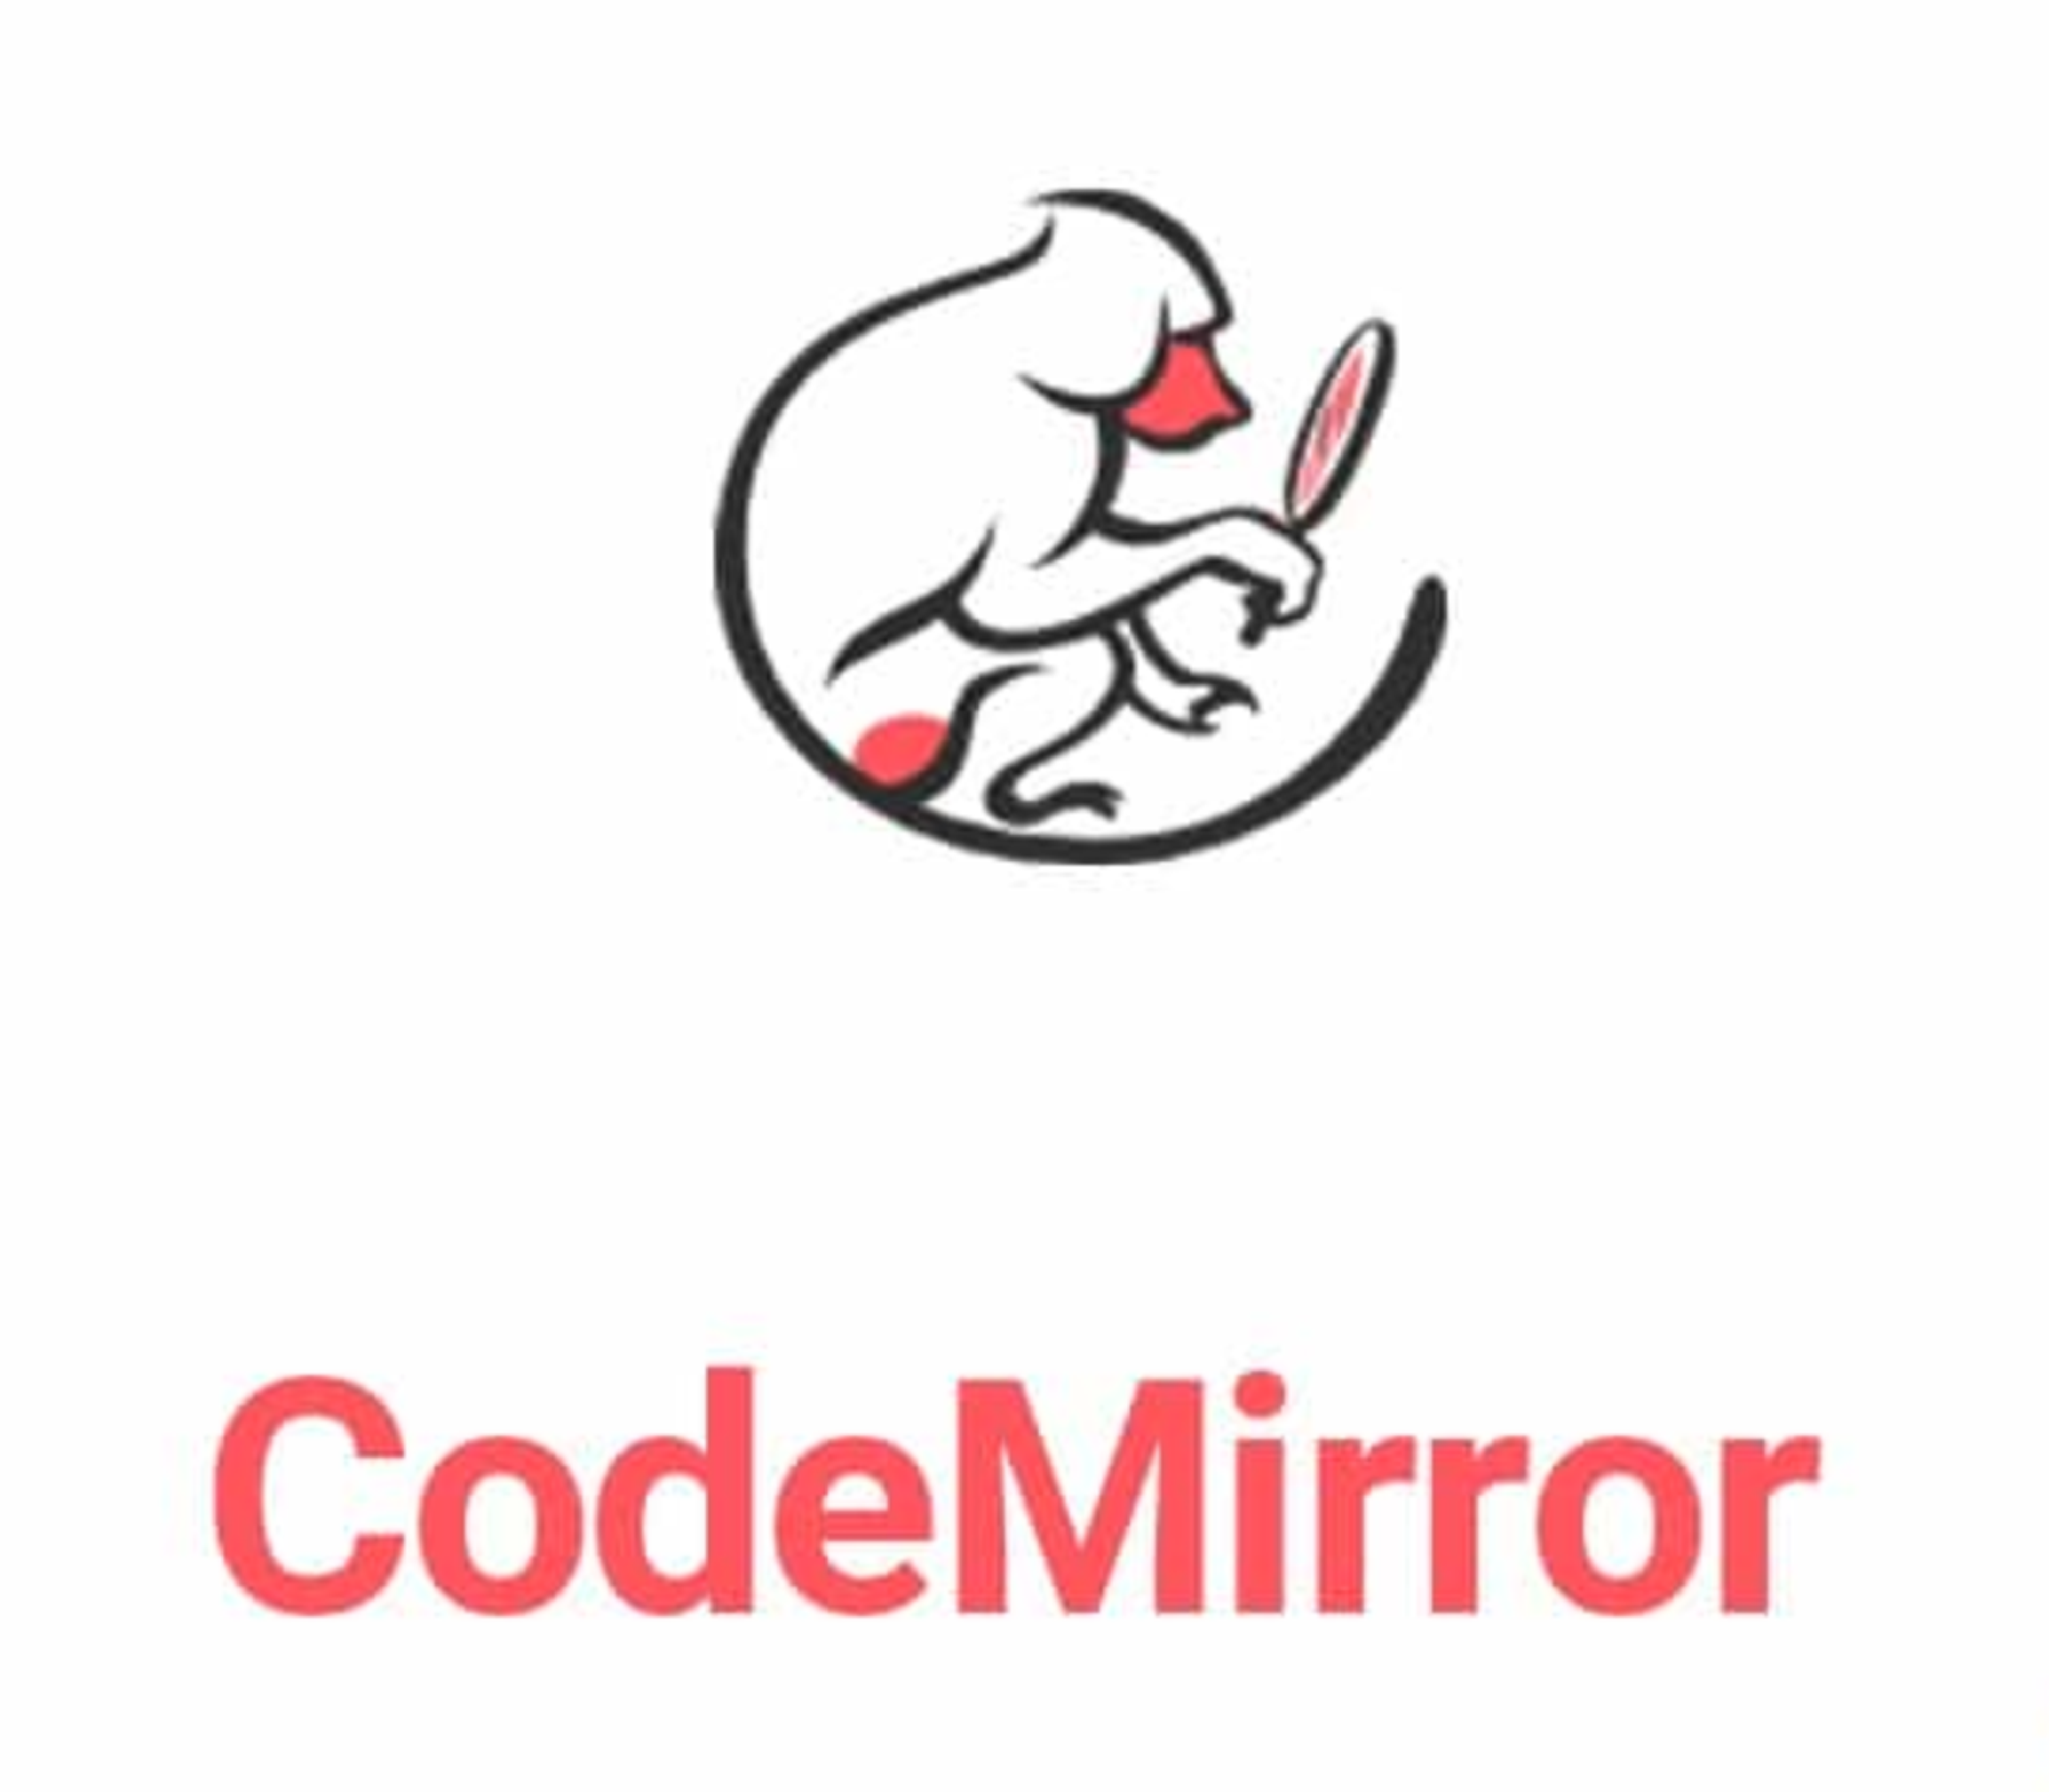 CodeMirror logo